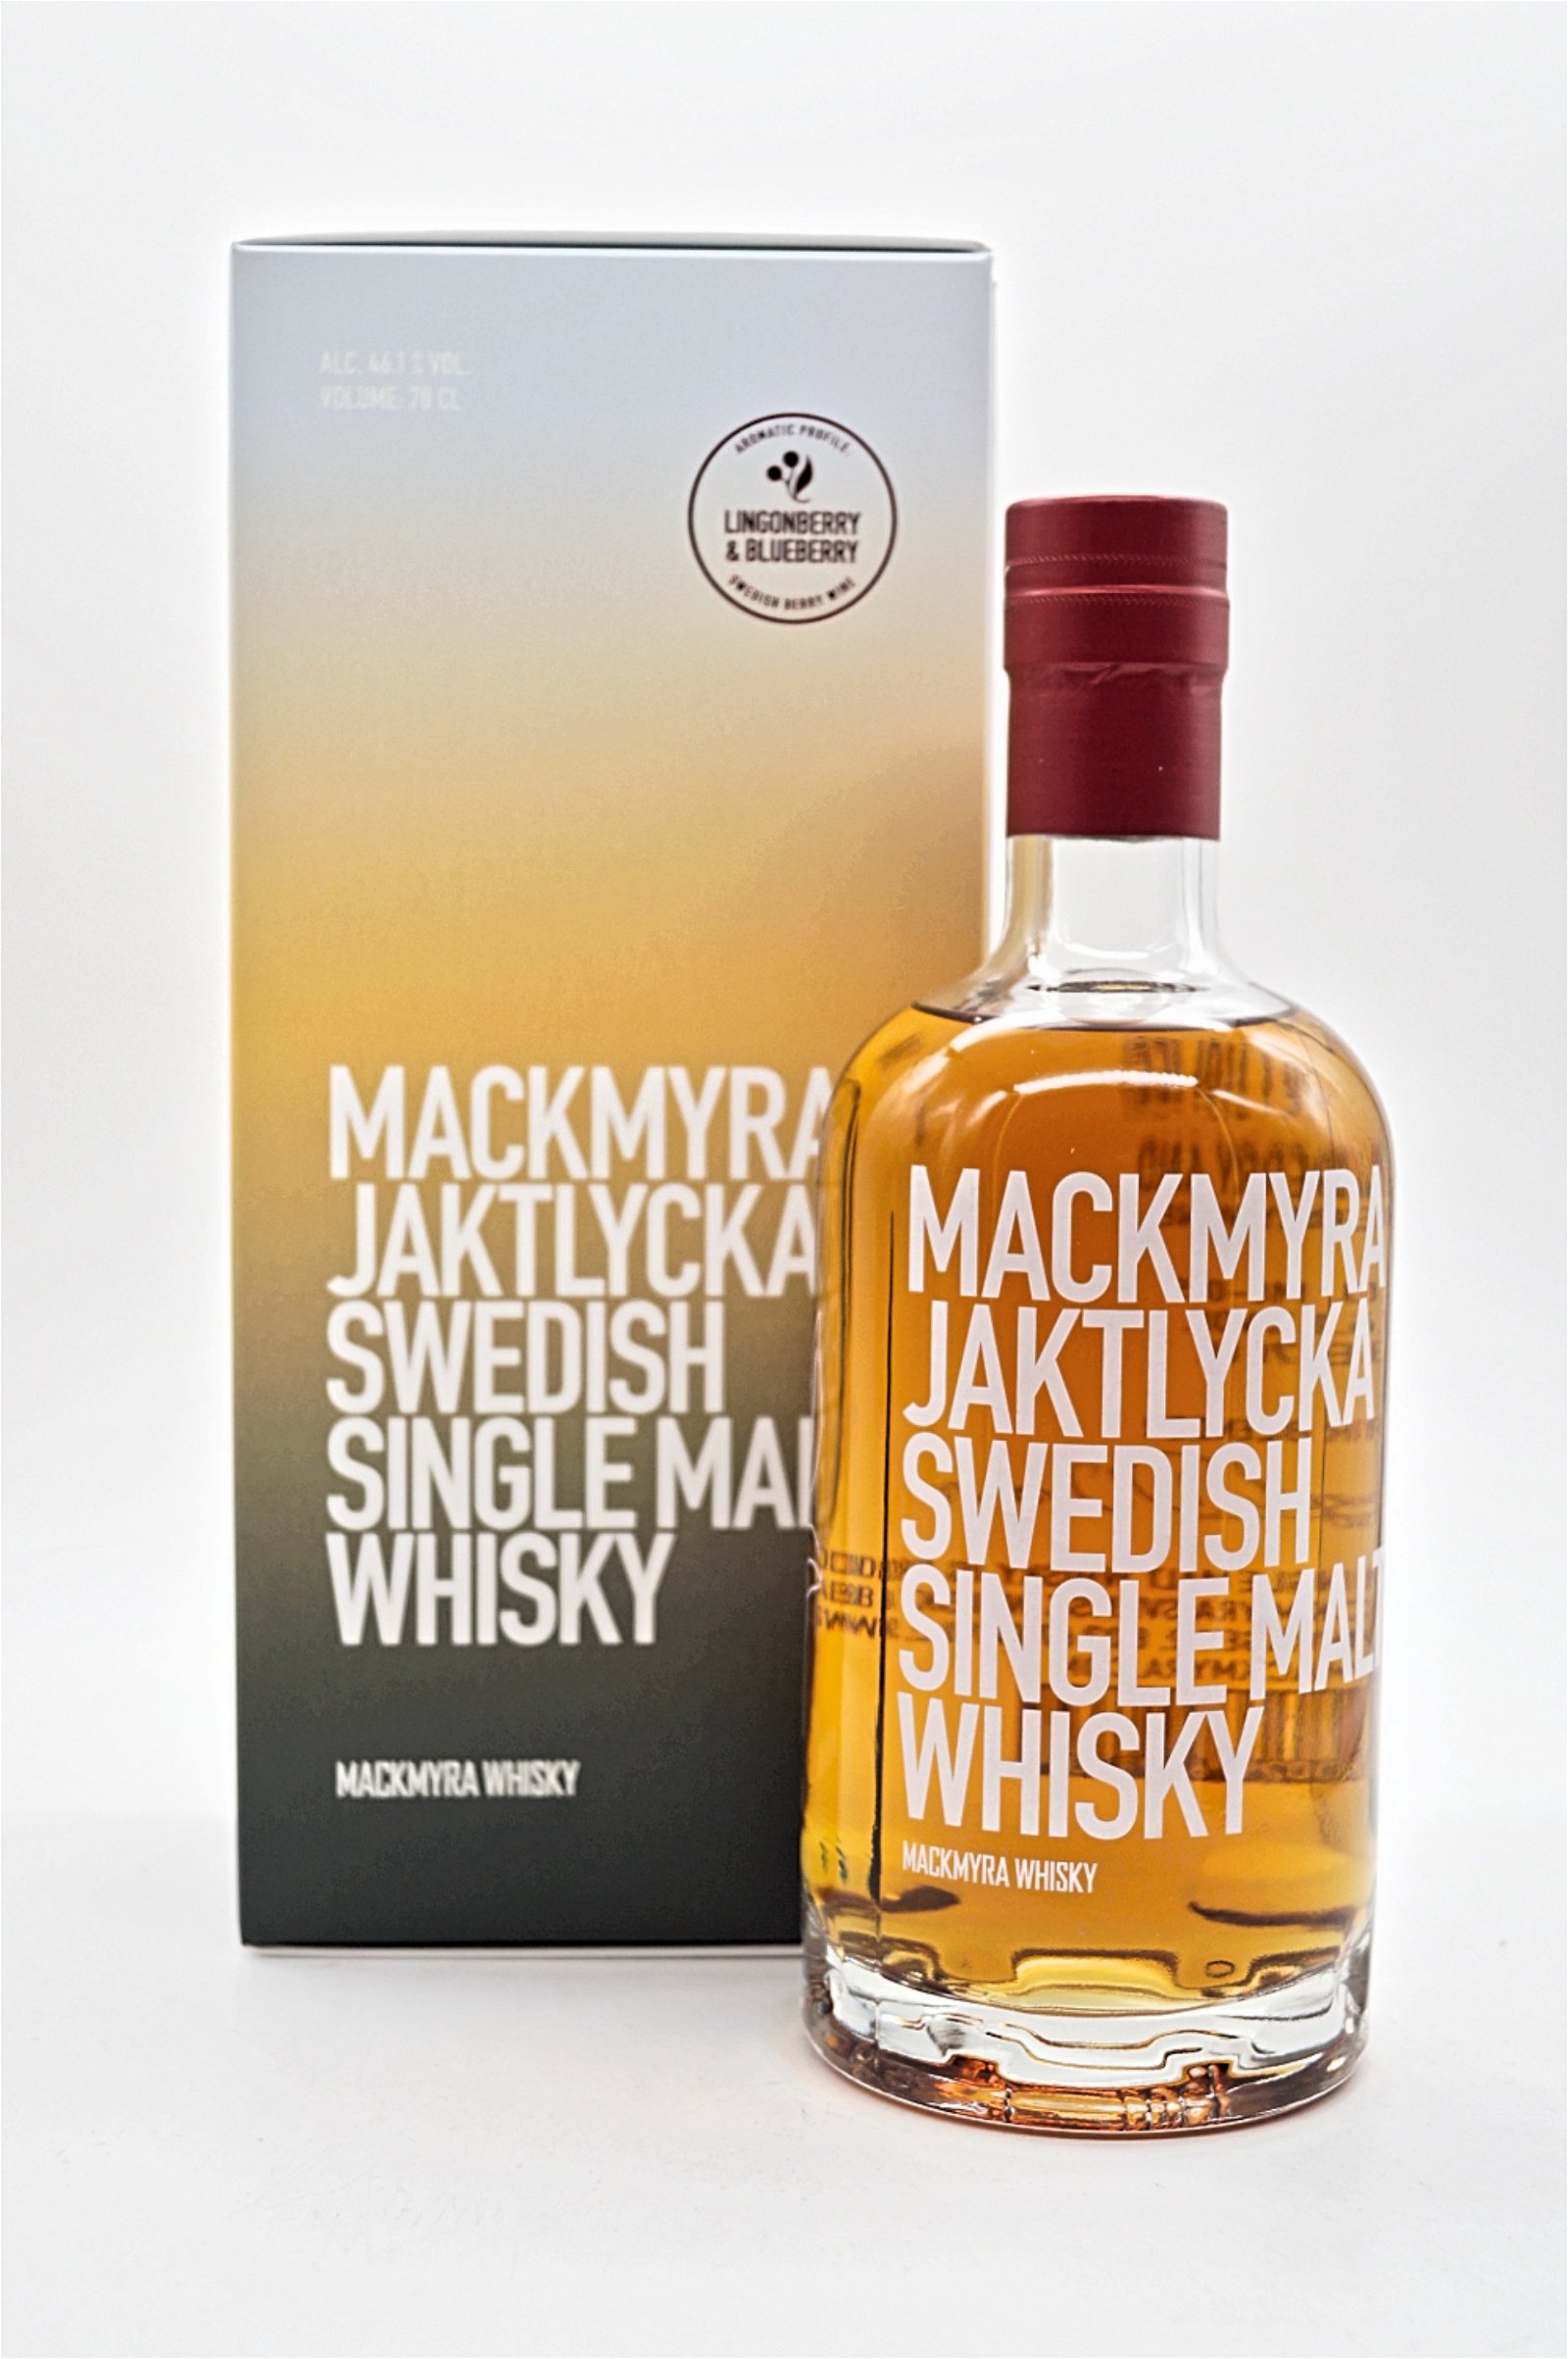 Mackmyra Jaktlycka Swedish Single Malt Whisky